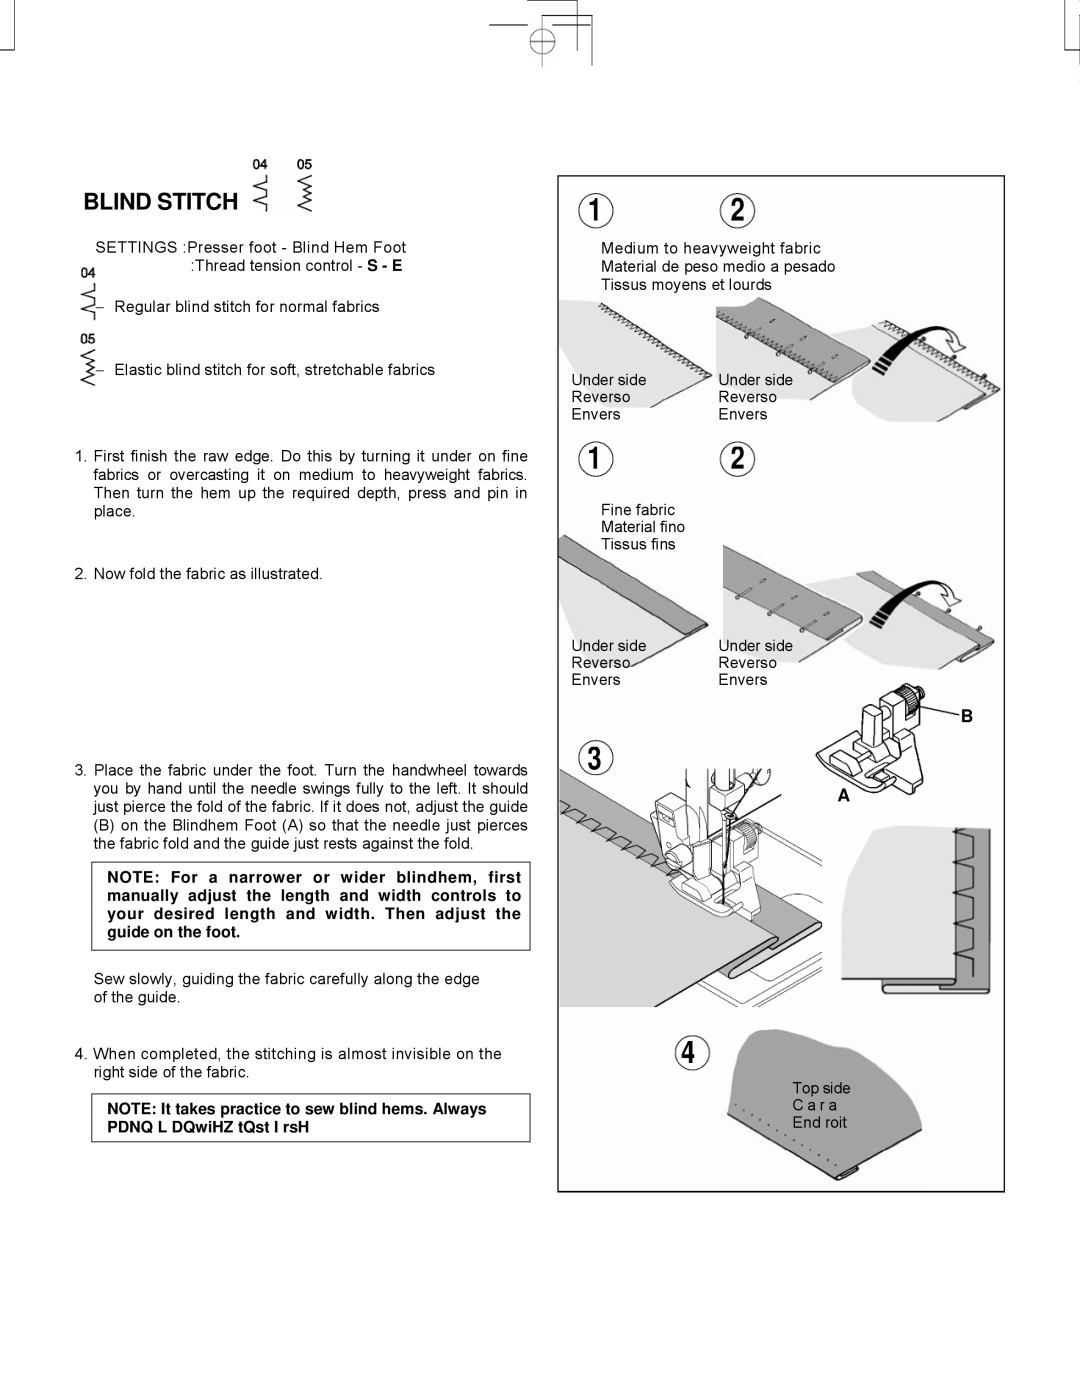 Singer CE-150 instruction manual Blind Stitch 